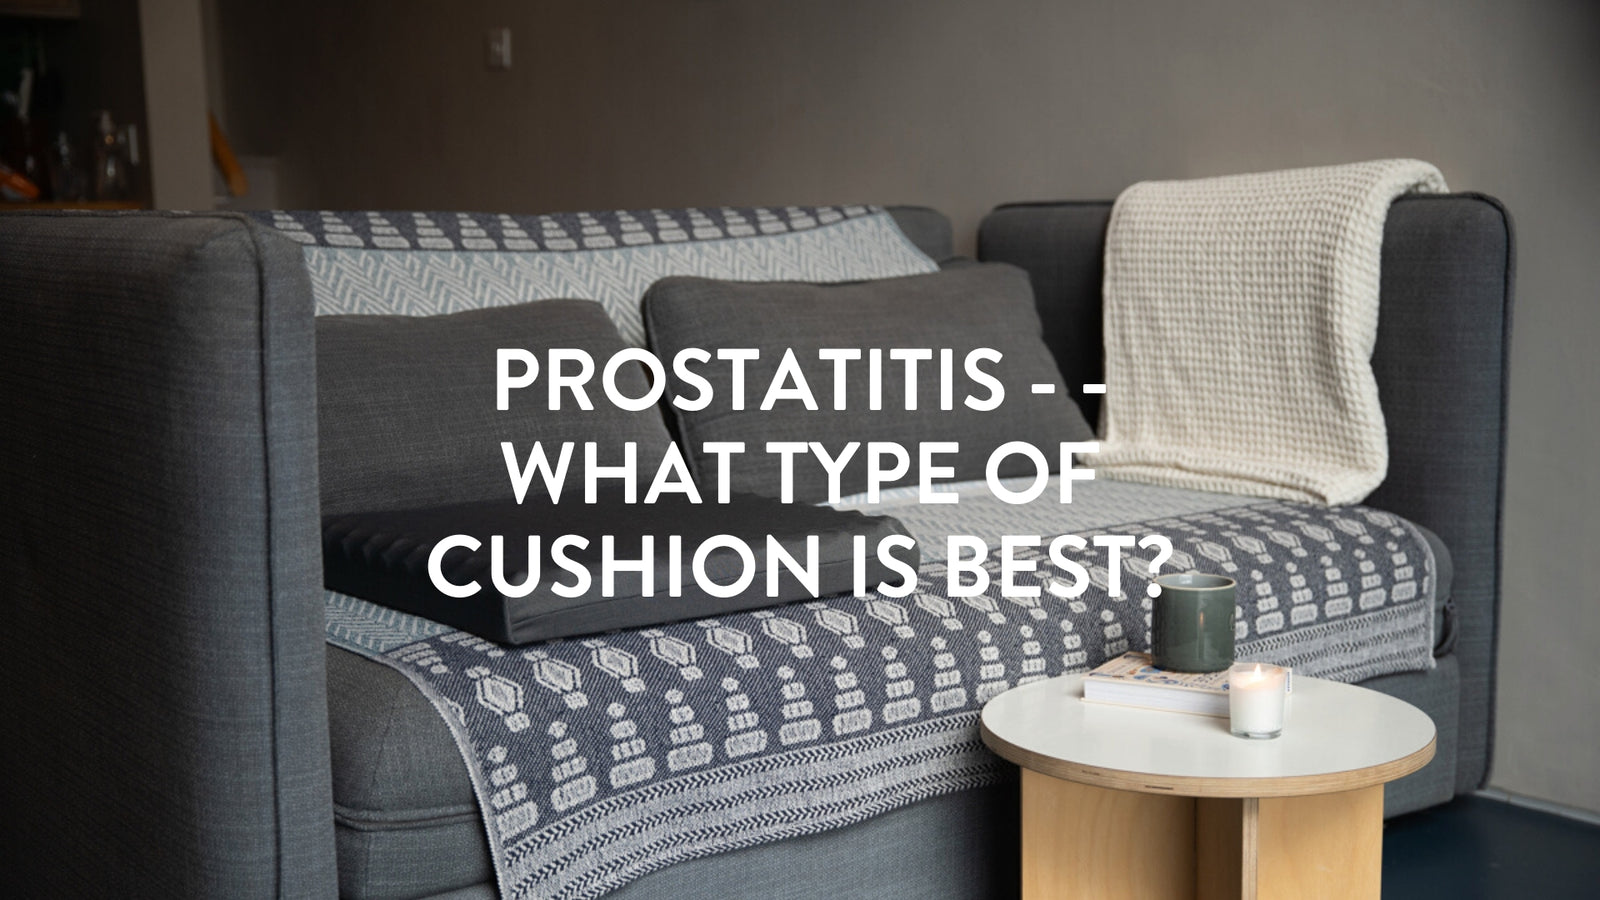 Prostatitis - What type of Cushion is Best? Putnams